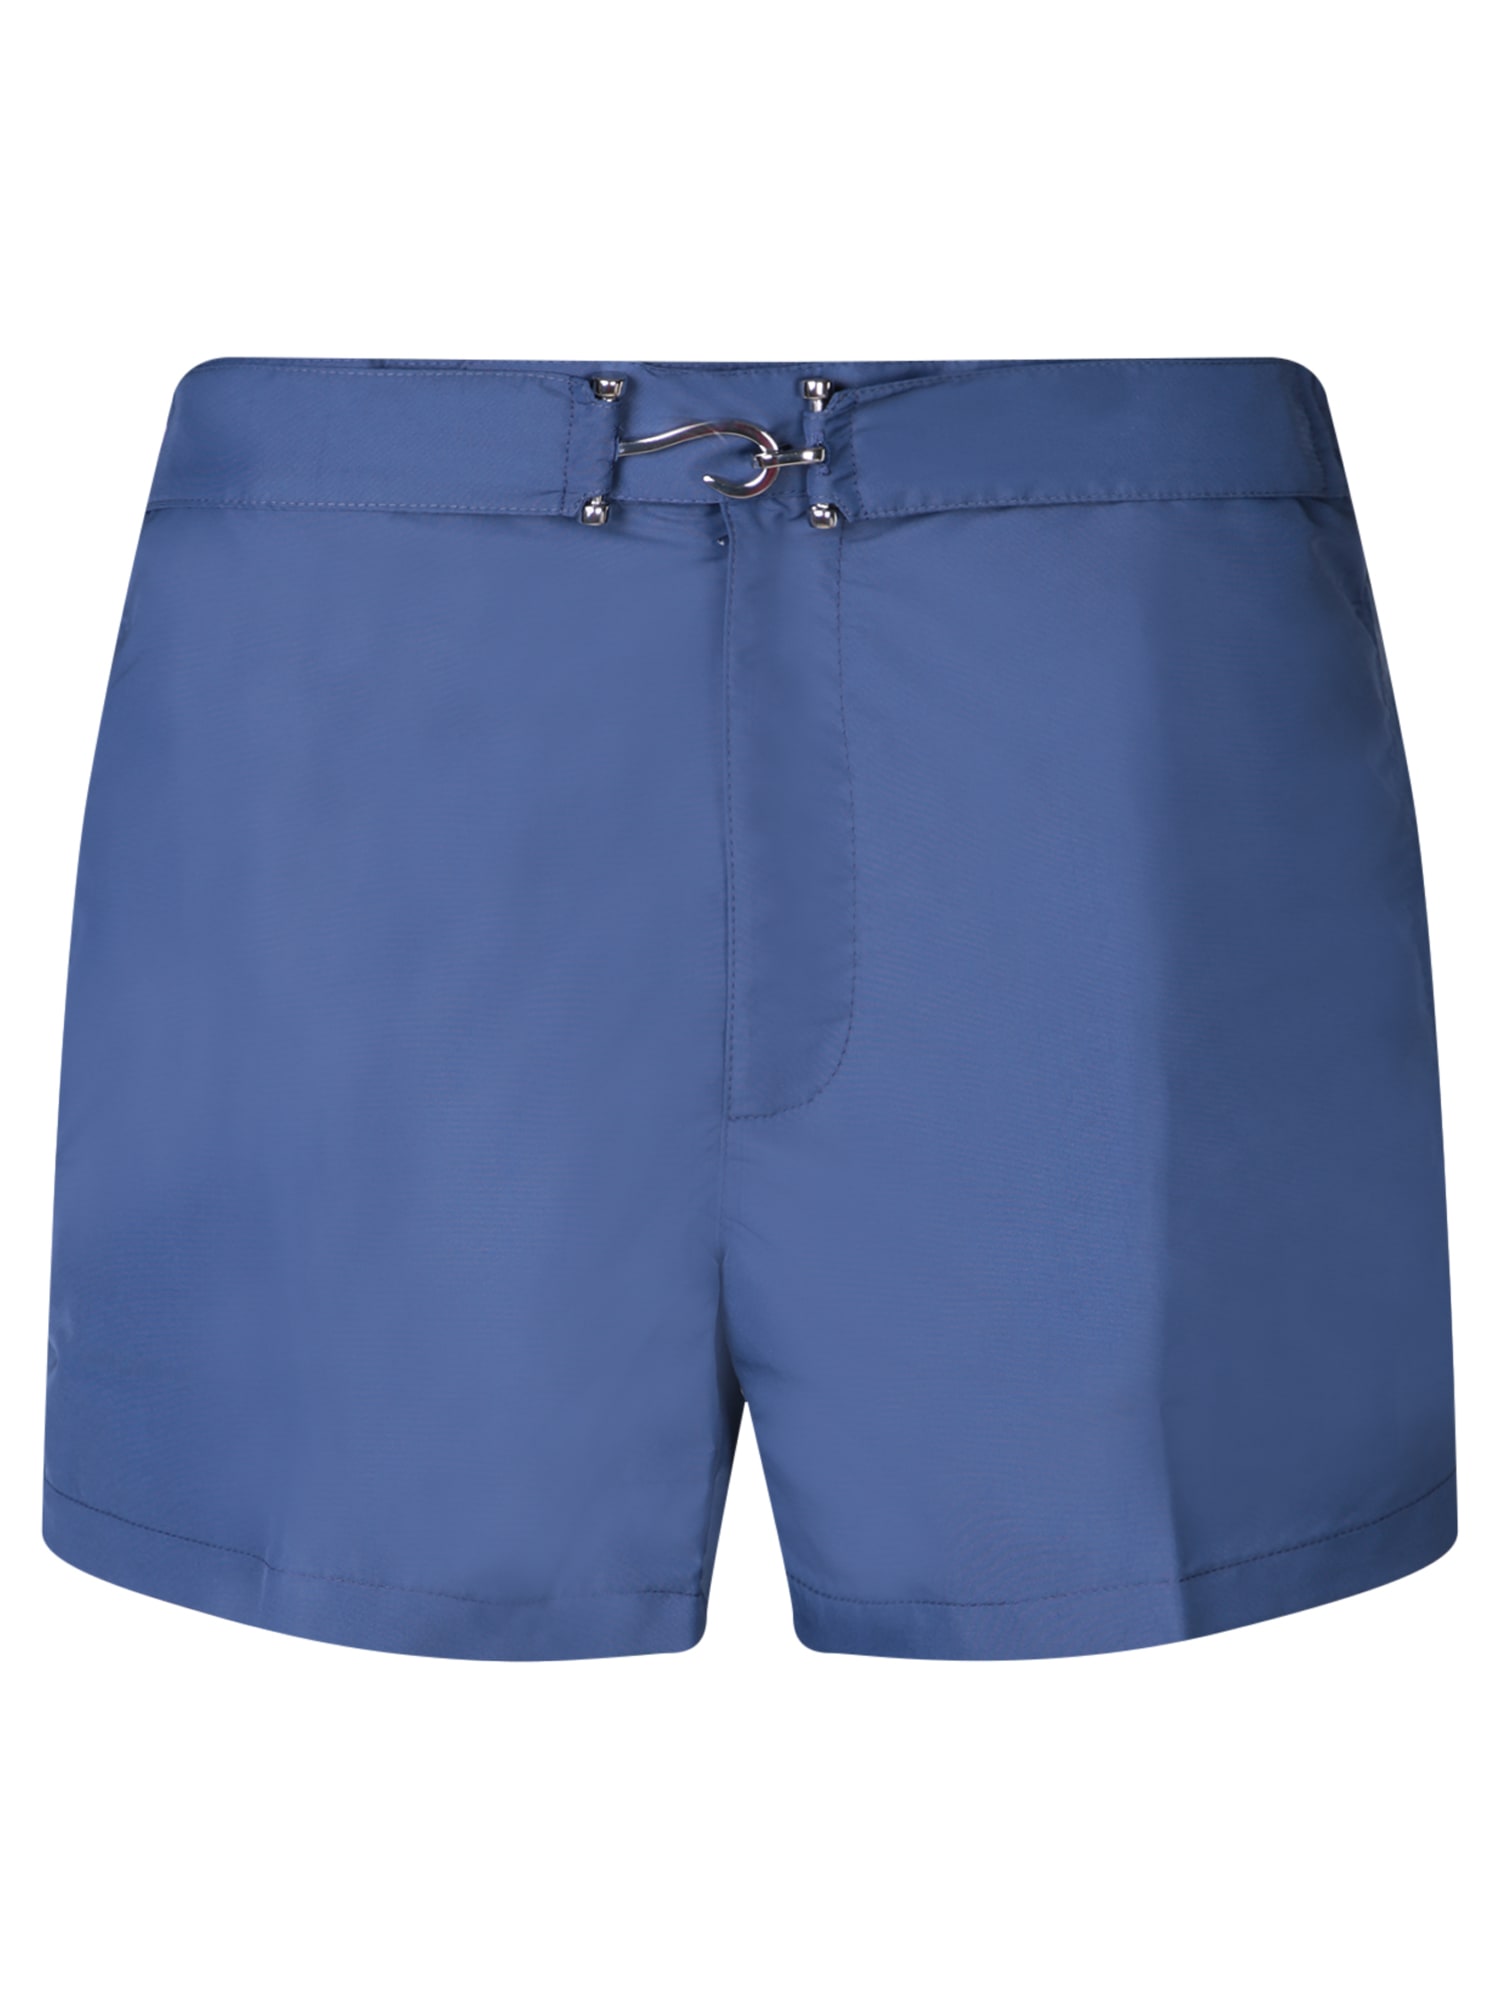 Comporta Blue Swim Shorts